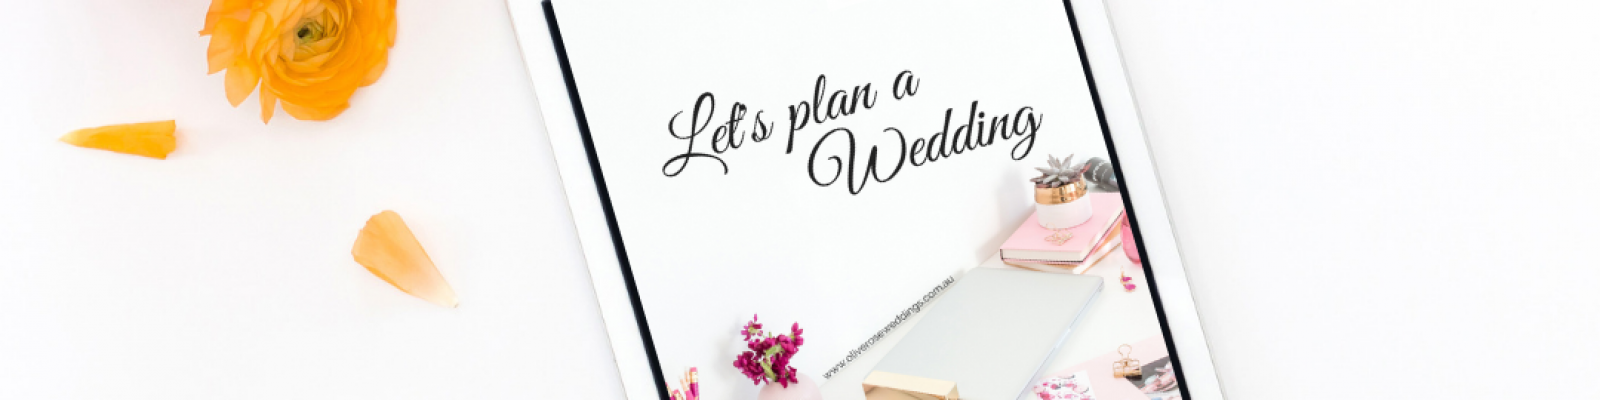 How to Plan a Wedding Workbook